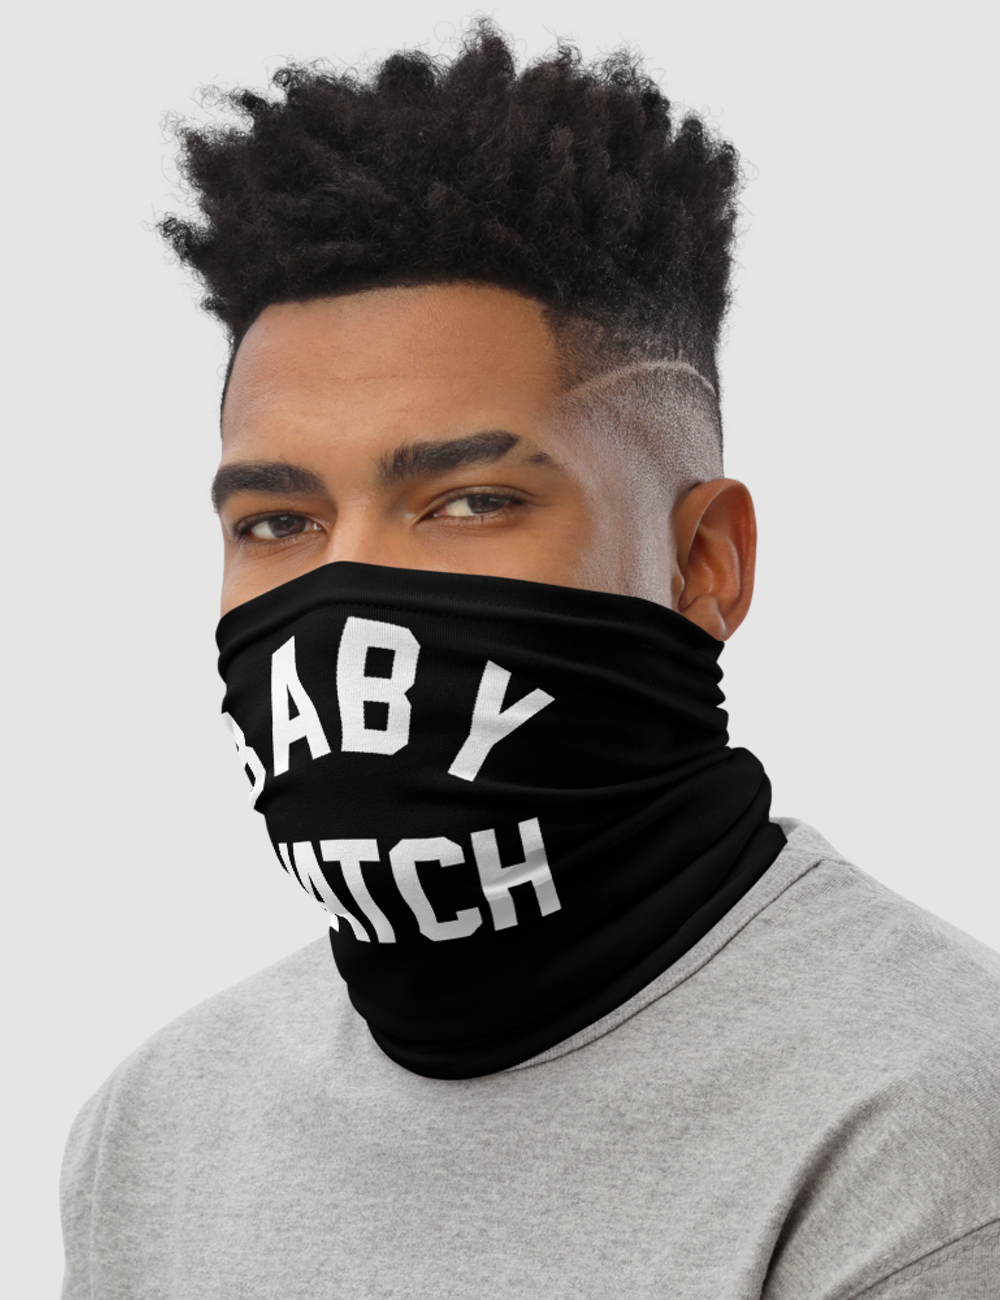 Baby Watch | Neck Gaiter Face Mask OniTakai